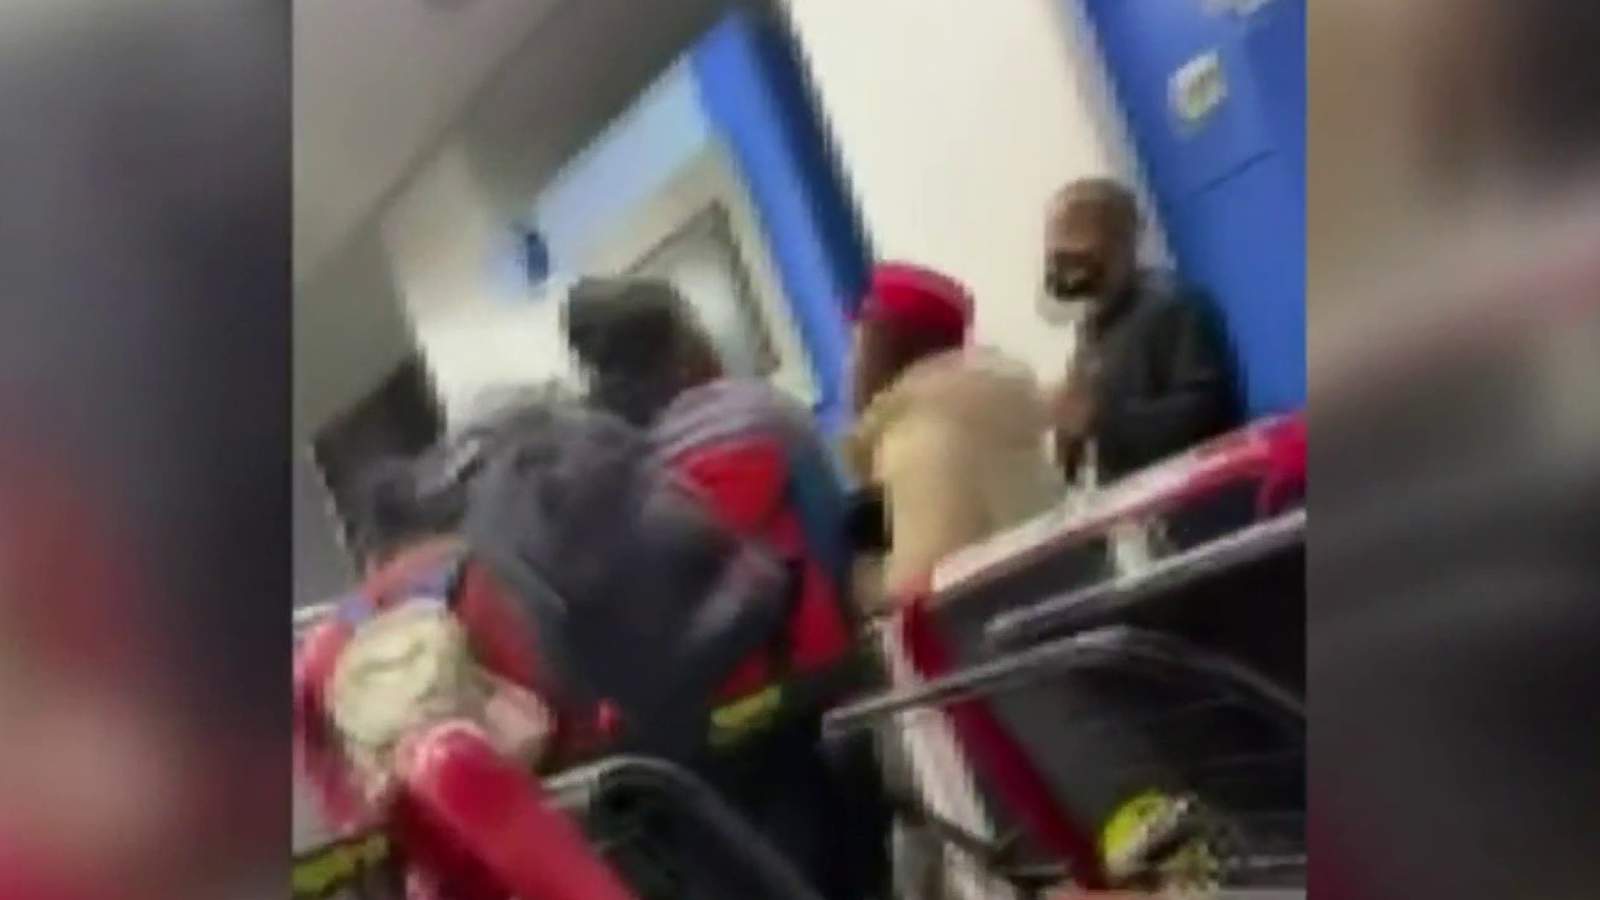 2 people accused in the Spirit Airlines baggage dispute at Detroit Metro Airport